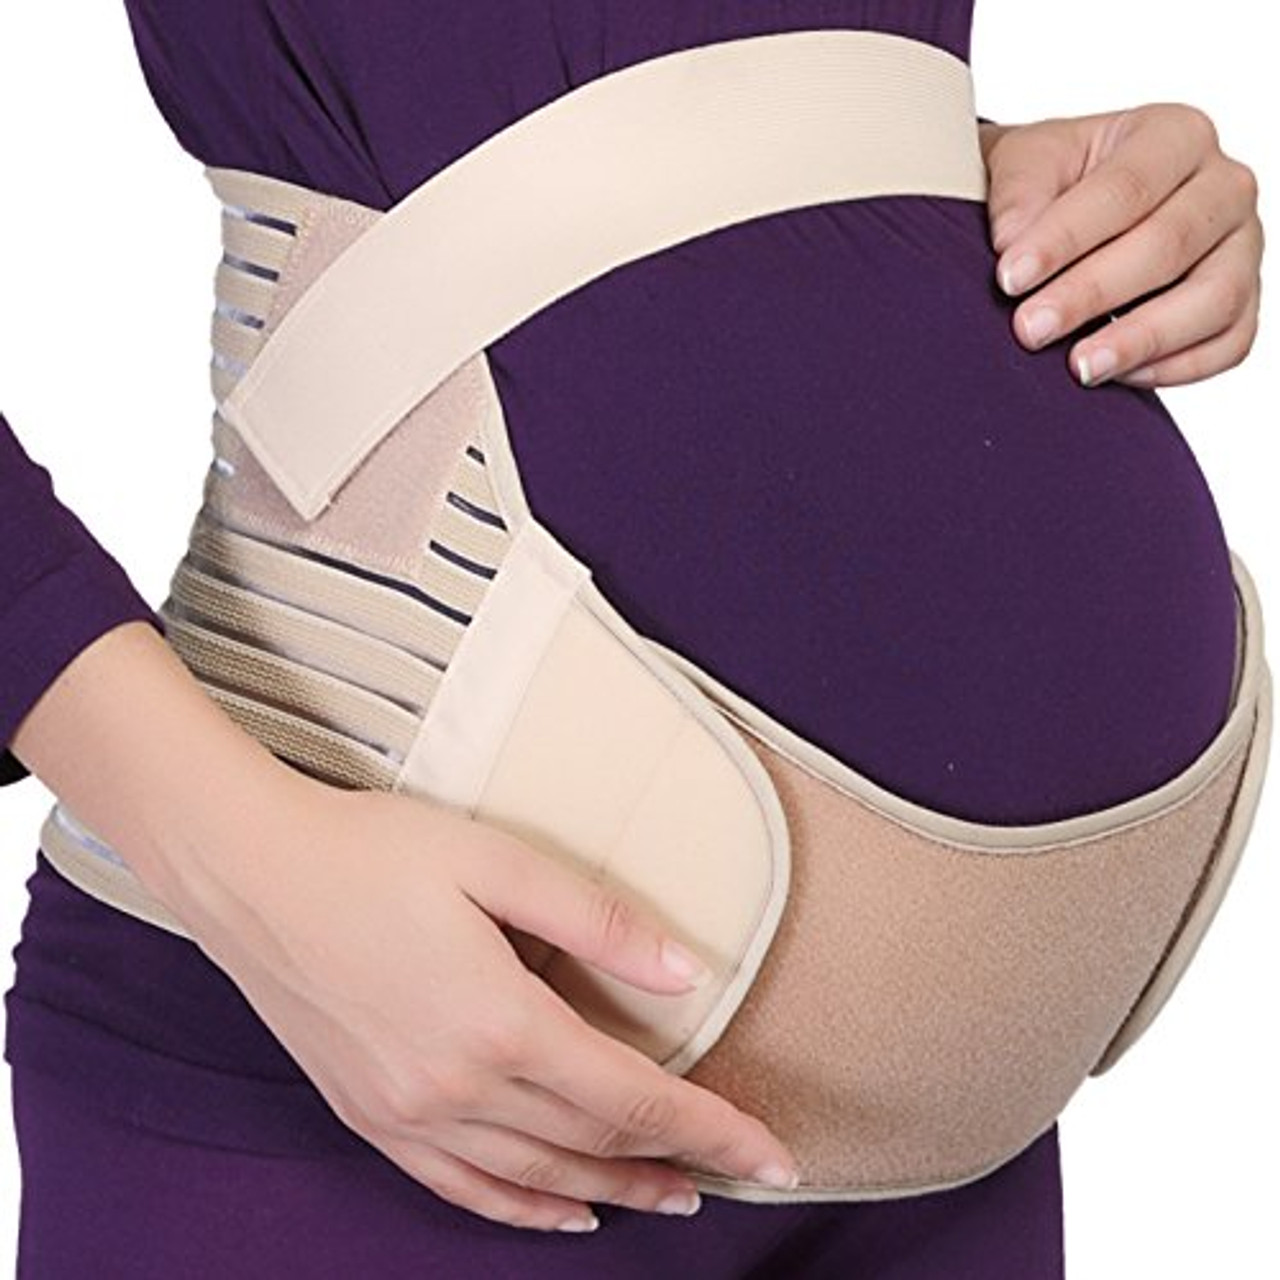 Stütz Gurt für schwangere Schwangerschaftsgurt Stützgürtel Bauch